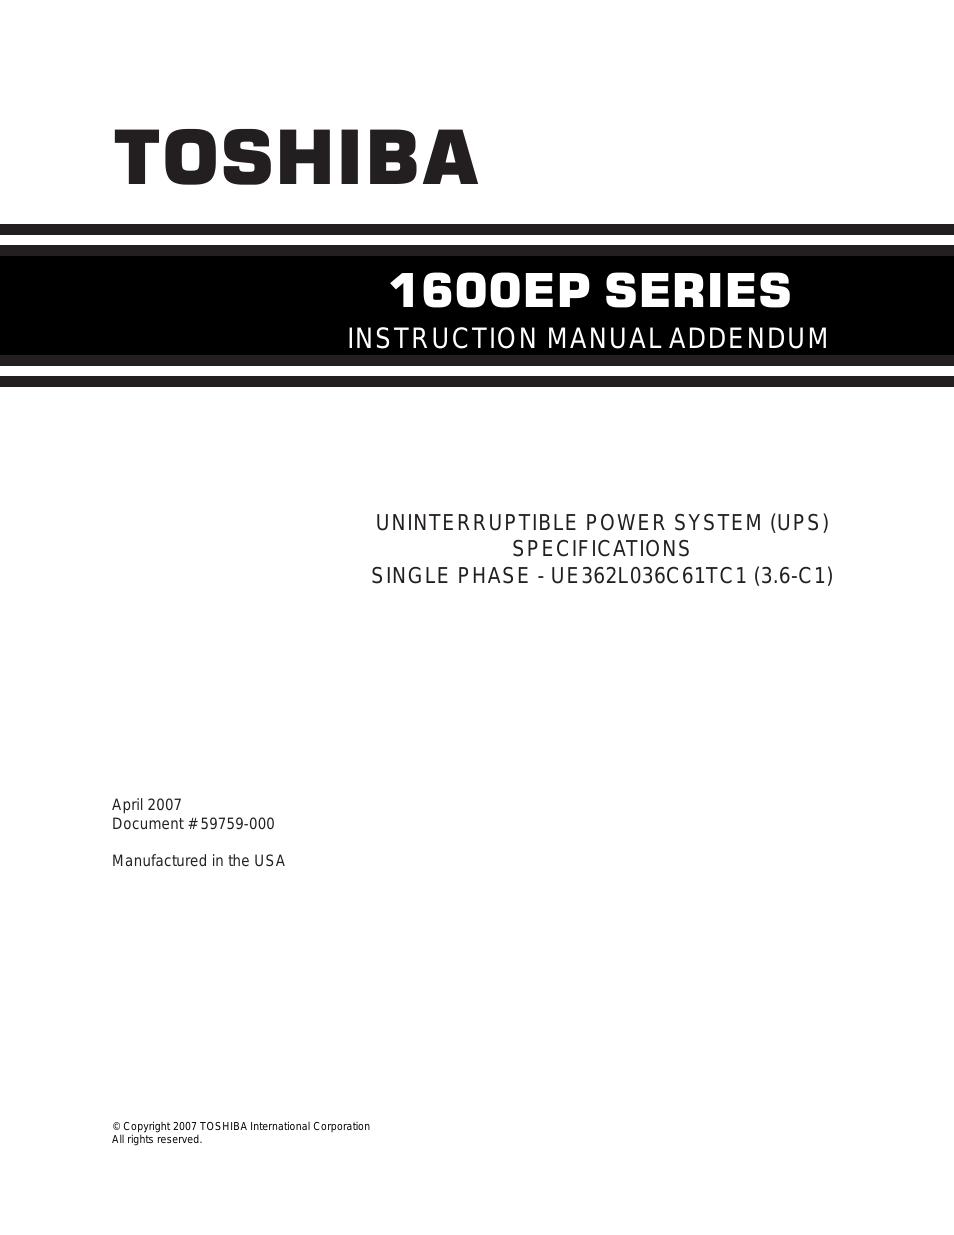 Toshiba 1600XP Series